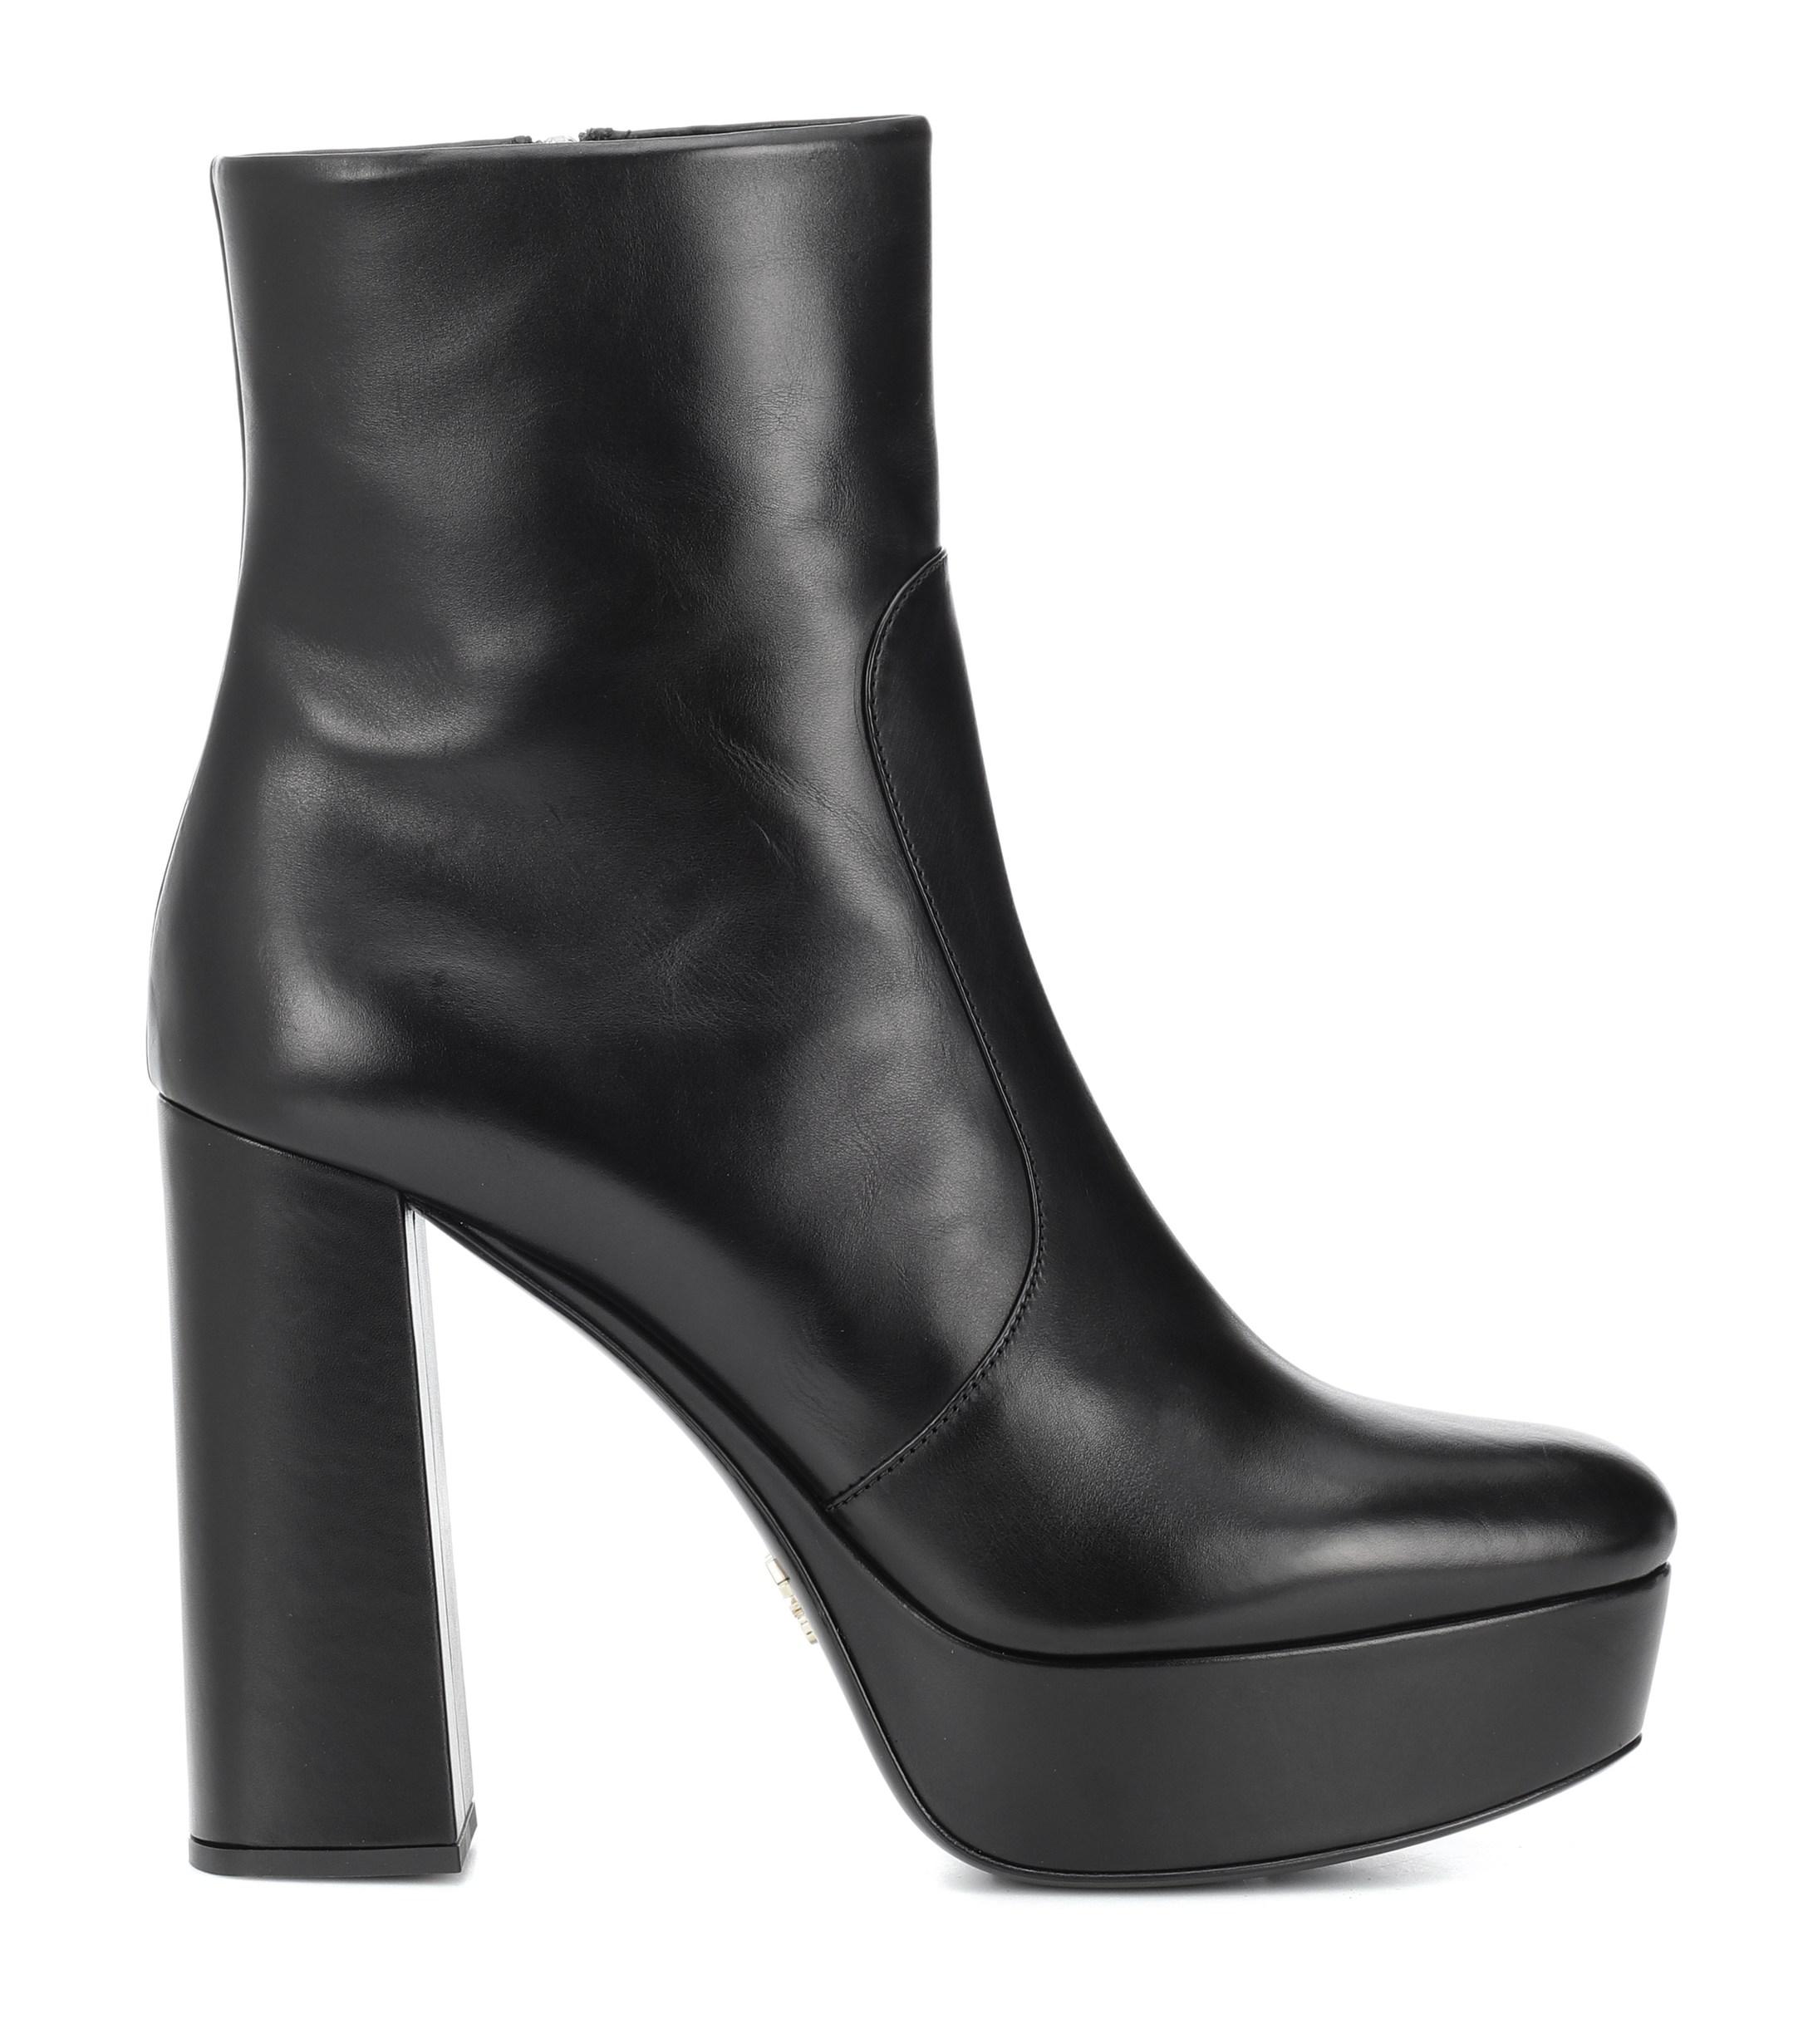 Prada Denim Plateau Leather Ankle Boots in Black - Lyst